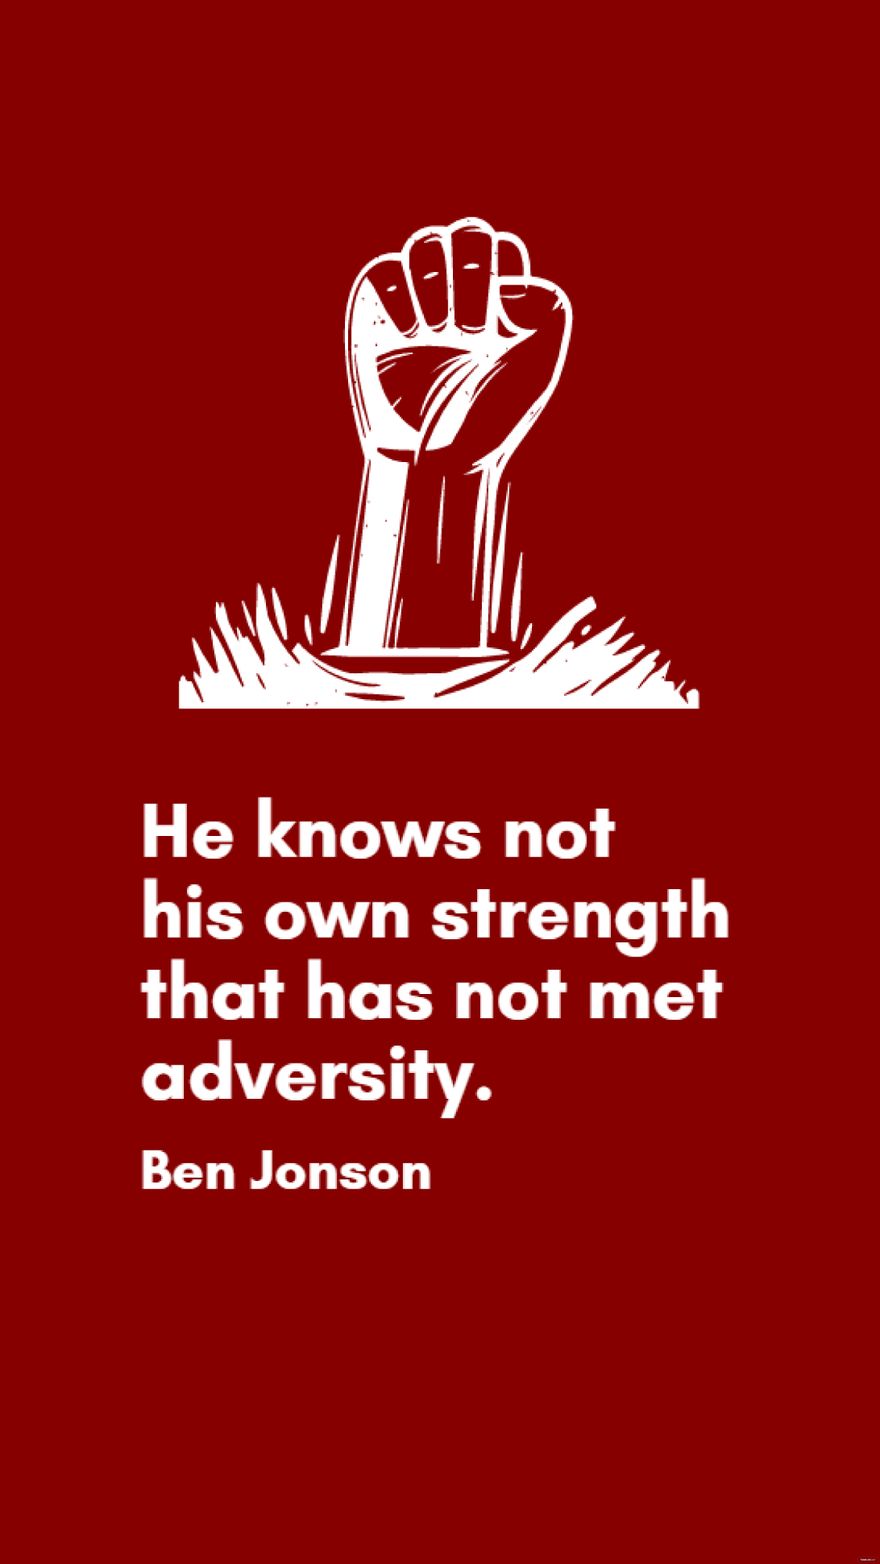 Ben Jonson - He knows not his own strength that has not met adversity.